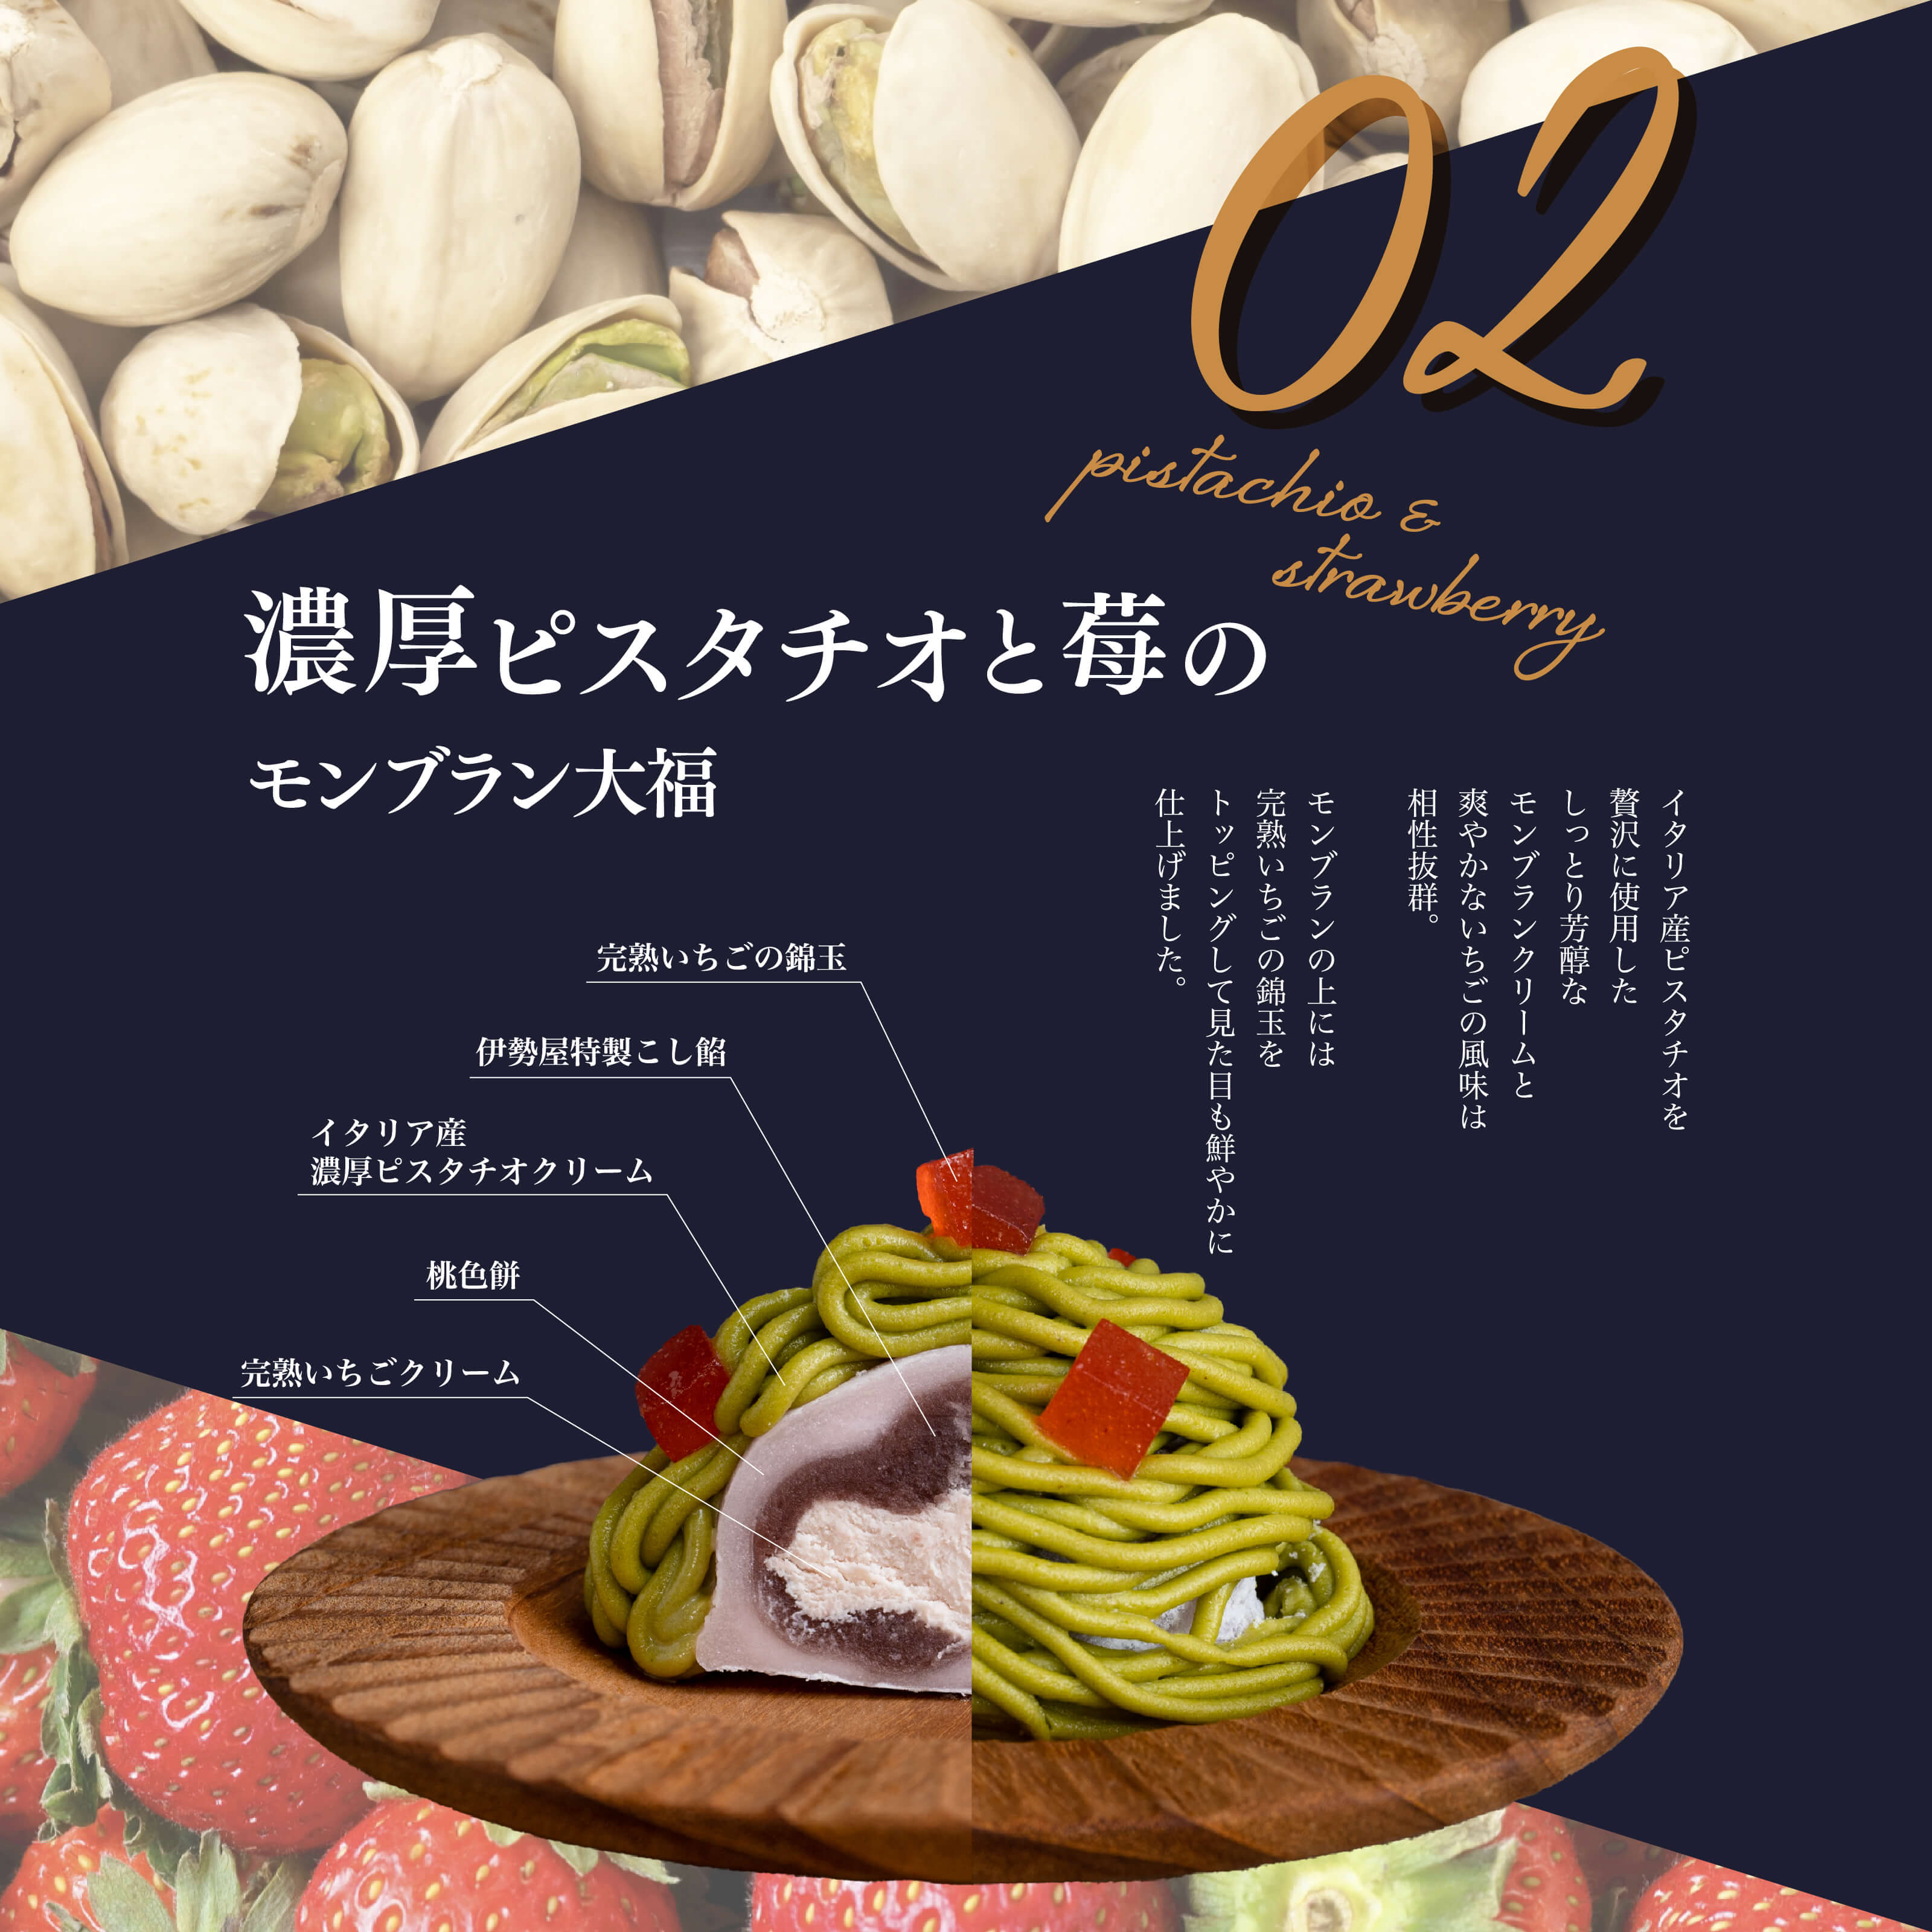 02 pistachio&strawberry 濃厚ピスタチオと莓のモンブラン大福